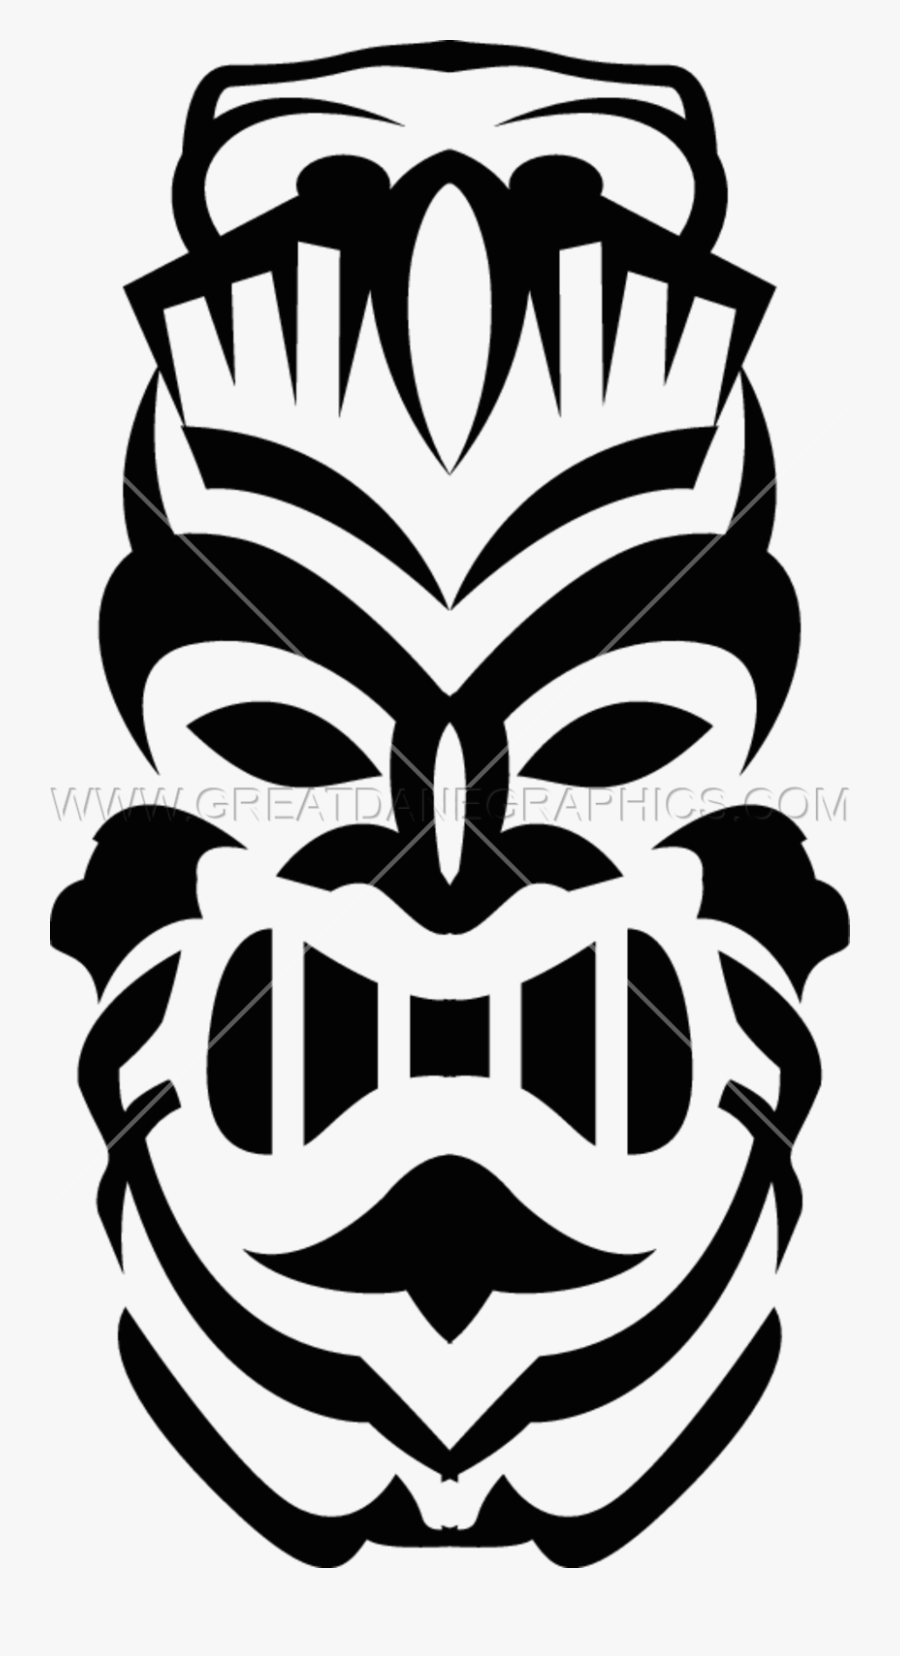 Tiki Clipart Tiki Head - Tiki Totem Clipart Black And White, Transparent Clipart